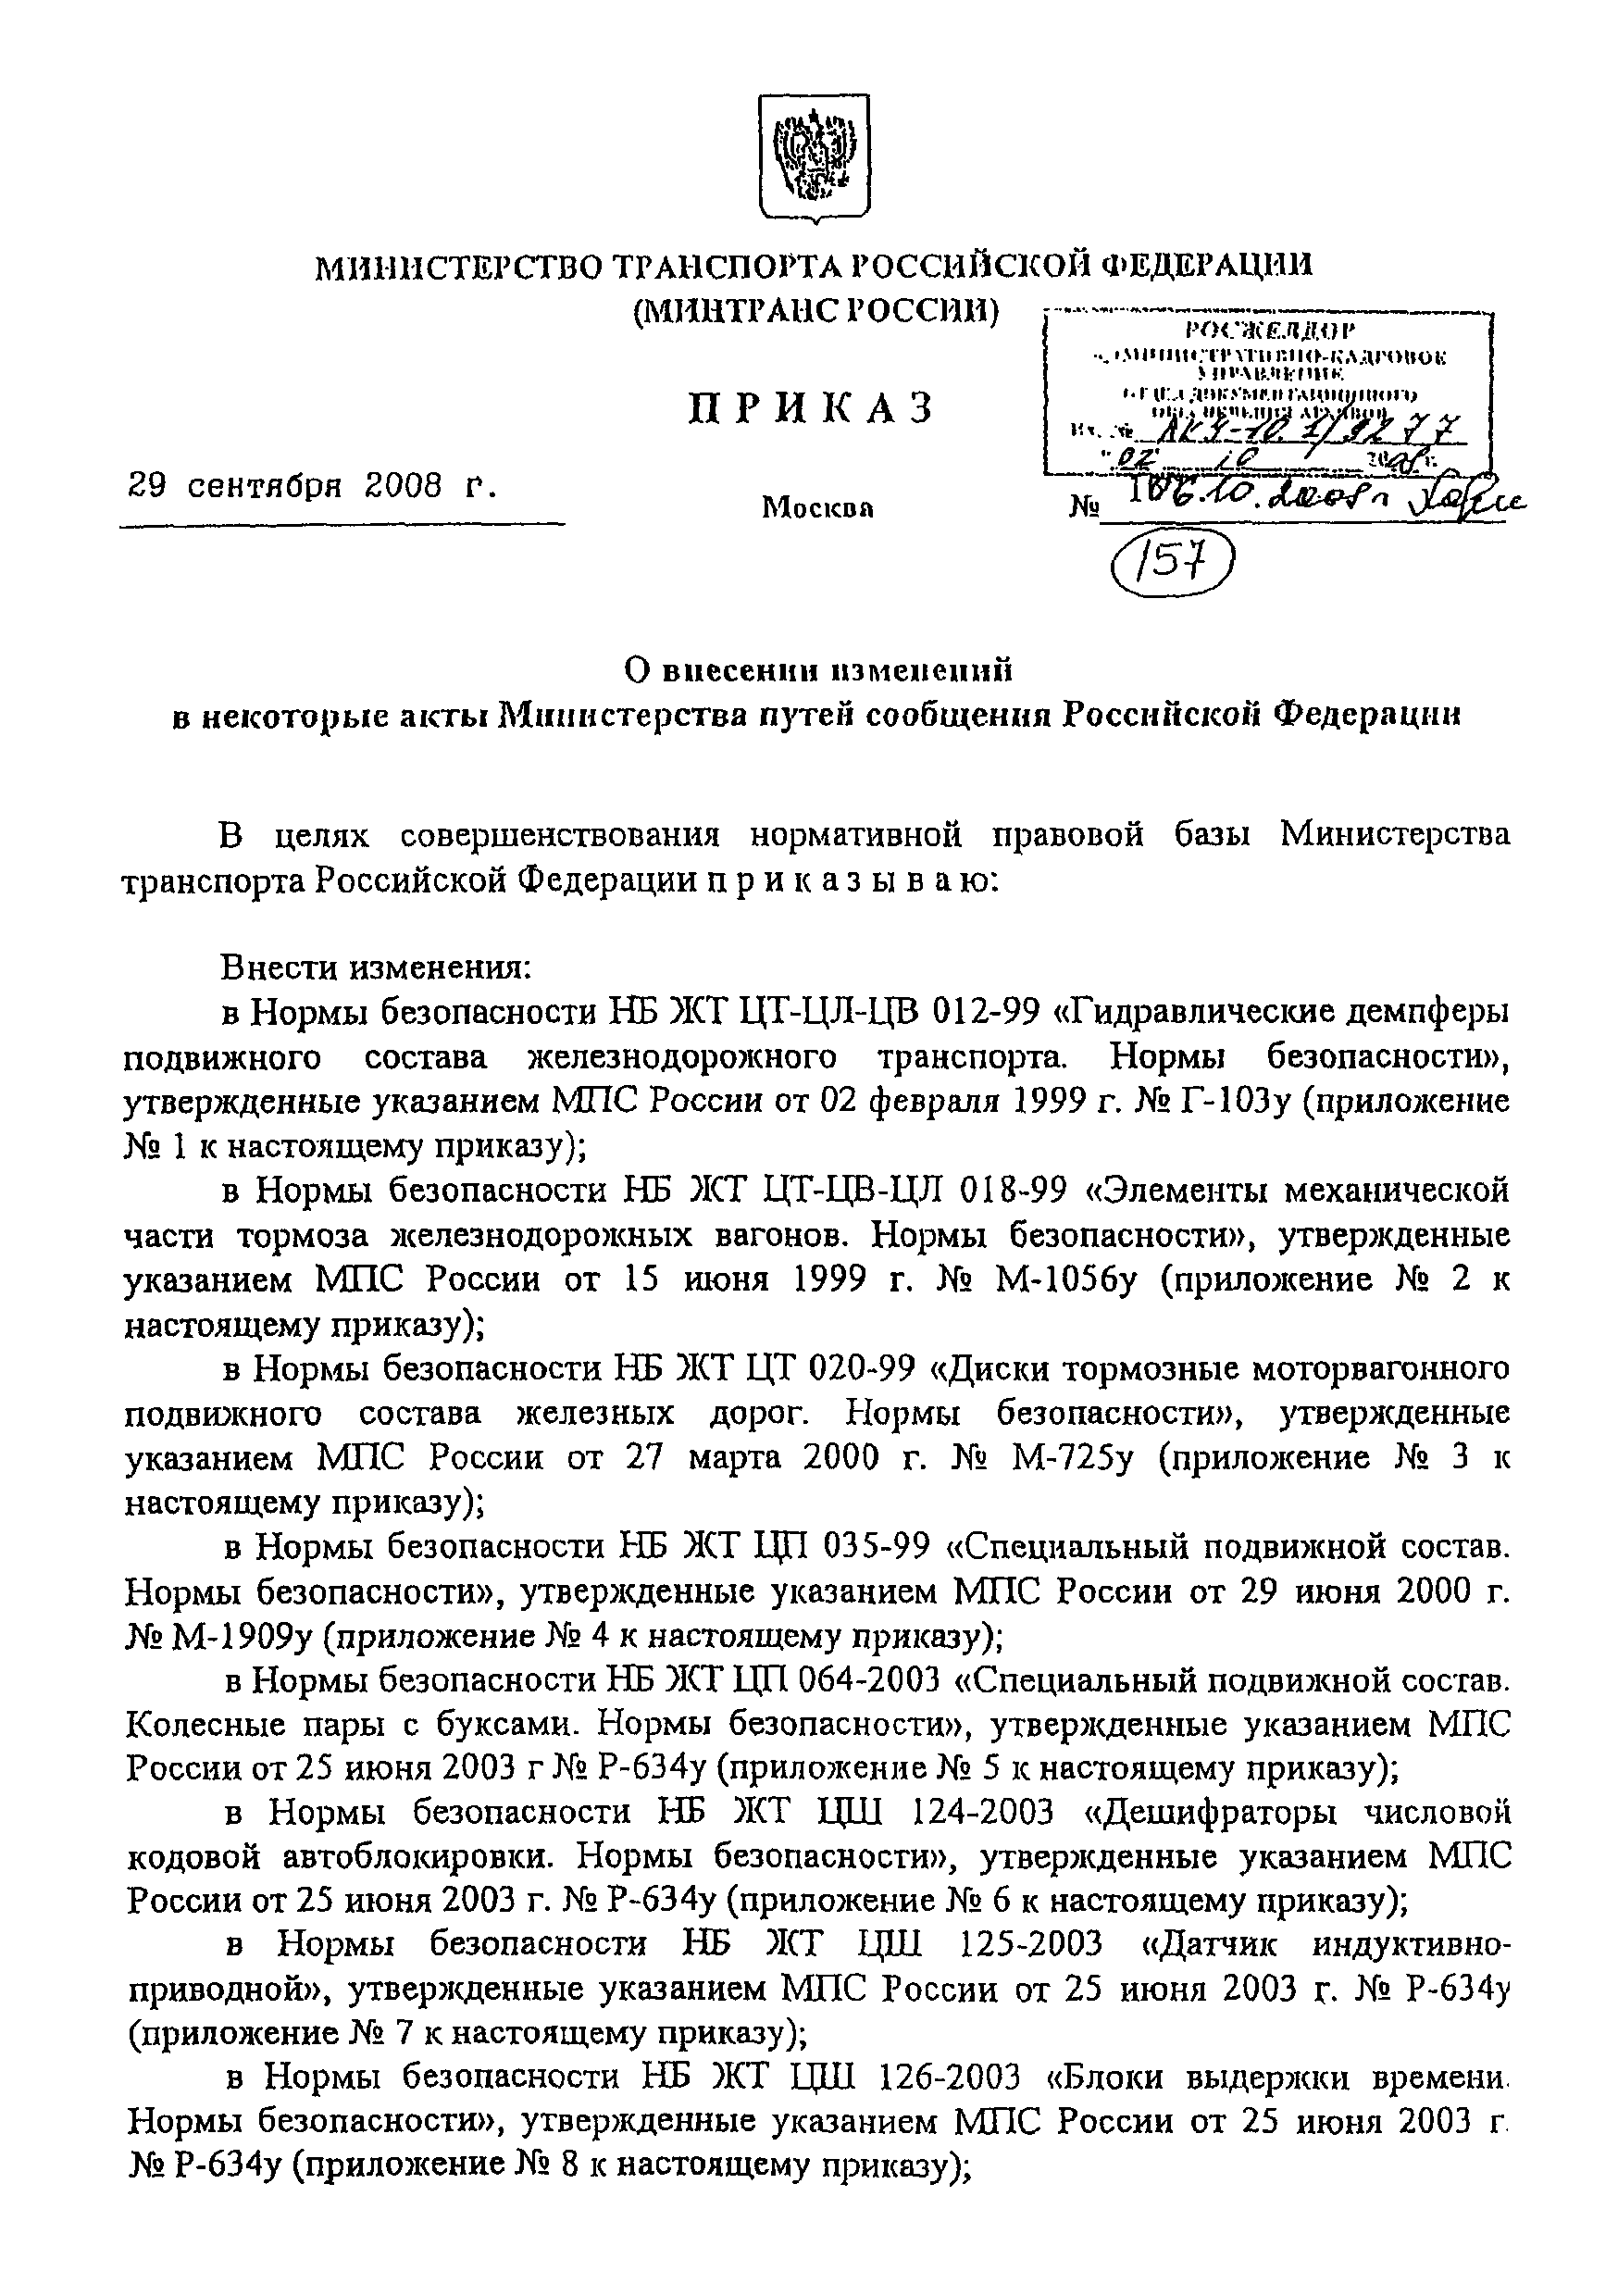 ФТС ЖТ ЦТ-ЦВ-ЦЛ 018-99